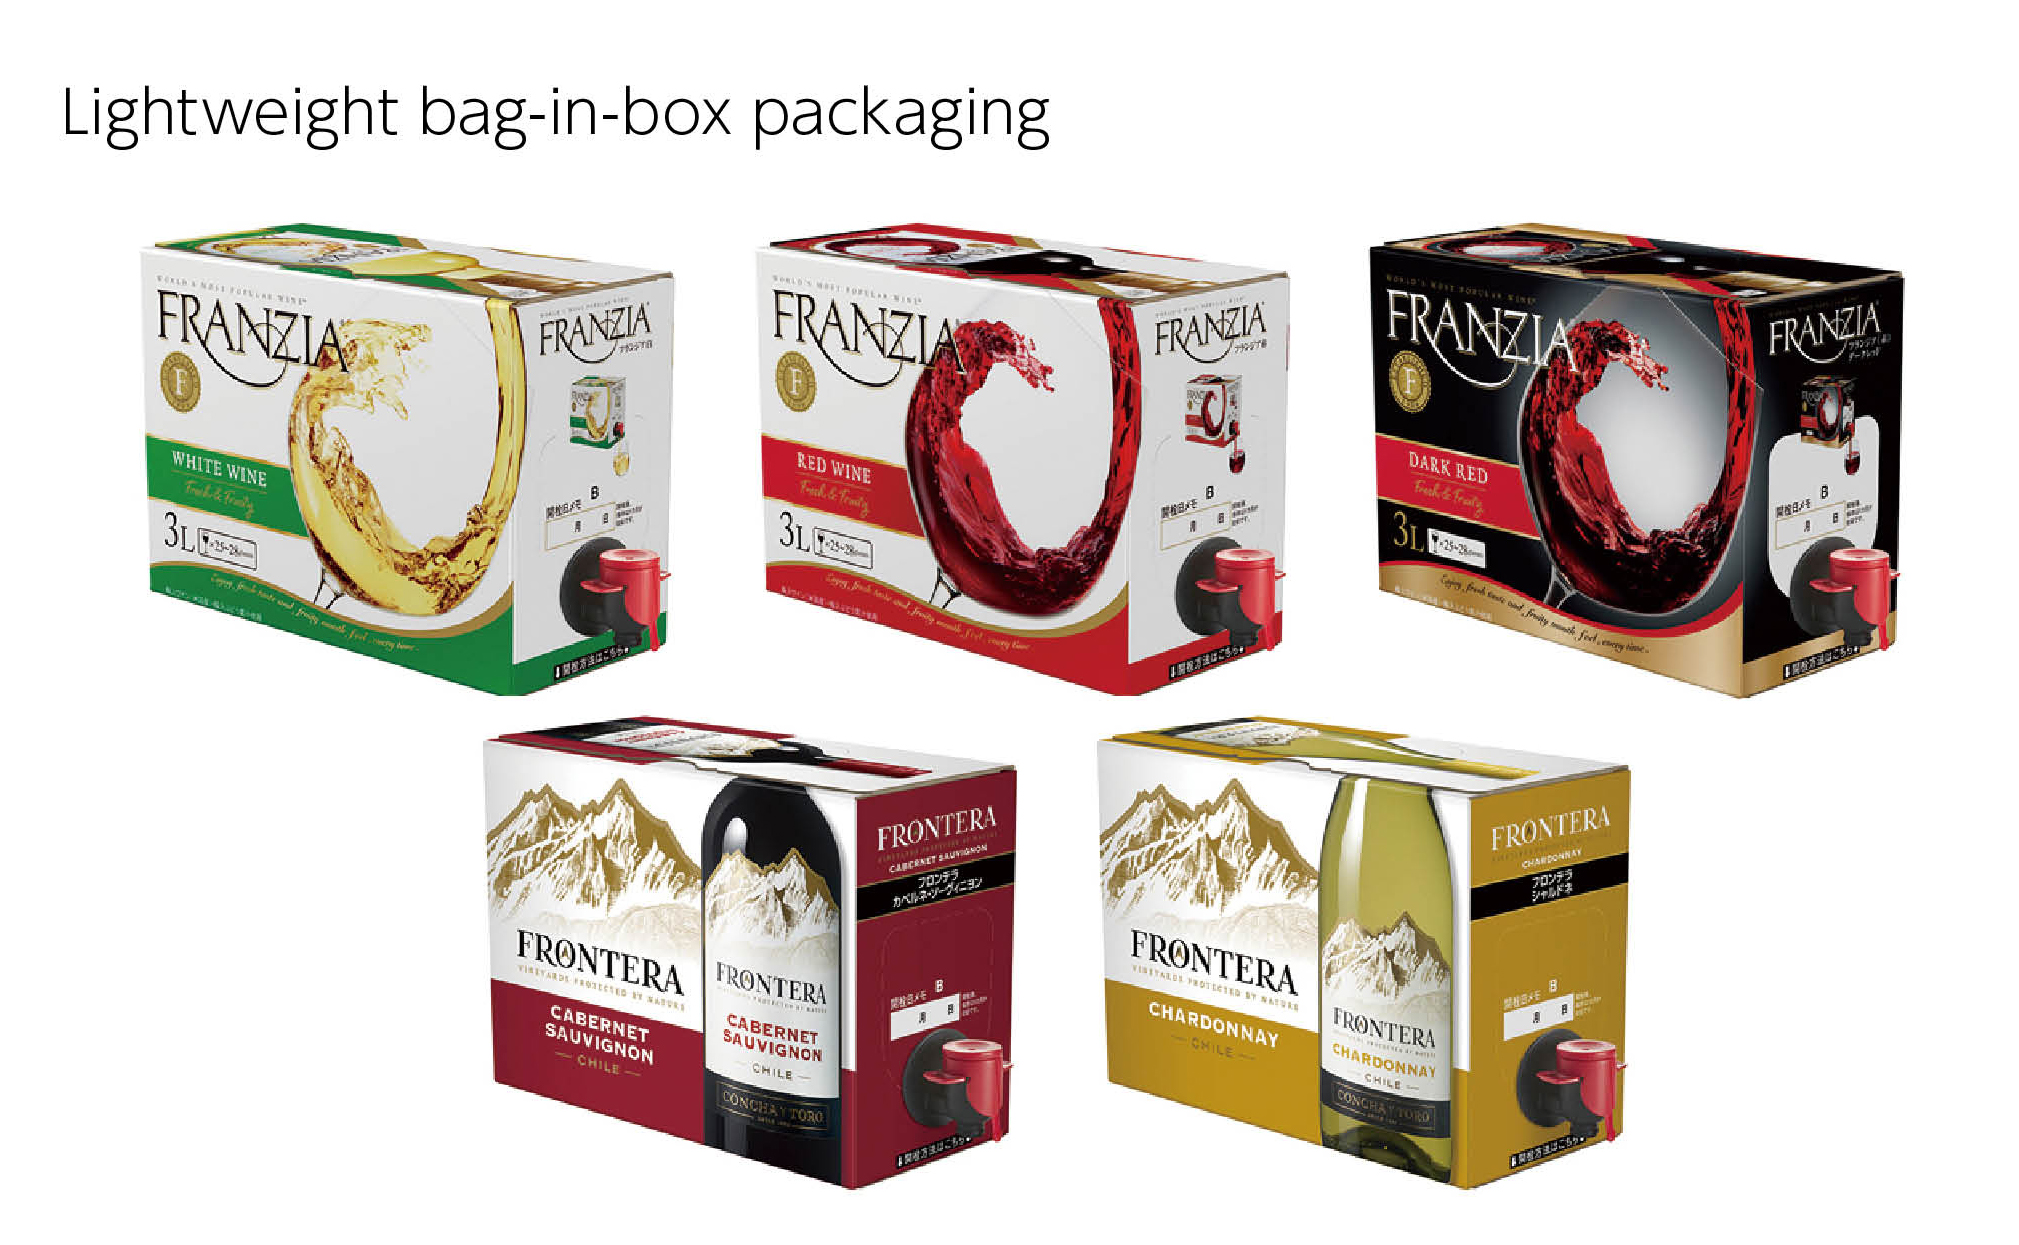 Lightweight bag-in-box packaging